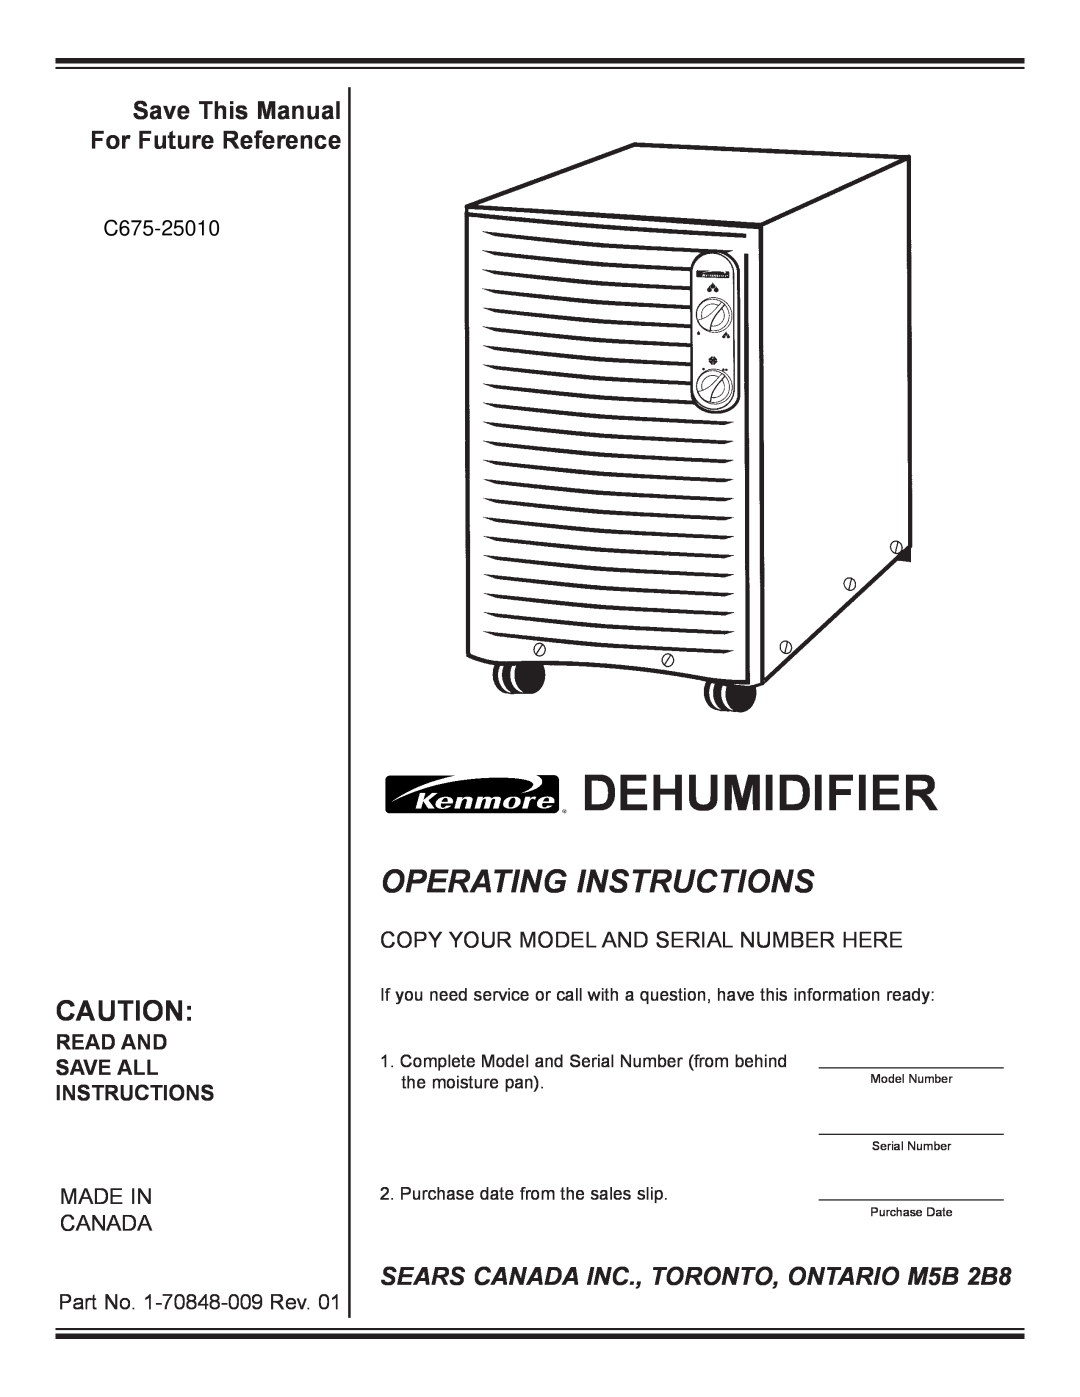 Kenmore C675-25010 manual Dehumidifier, Operating Instructions, SEARS CANADA INC., TORONTO, ONTARIO M5B 2B8, Model Number 